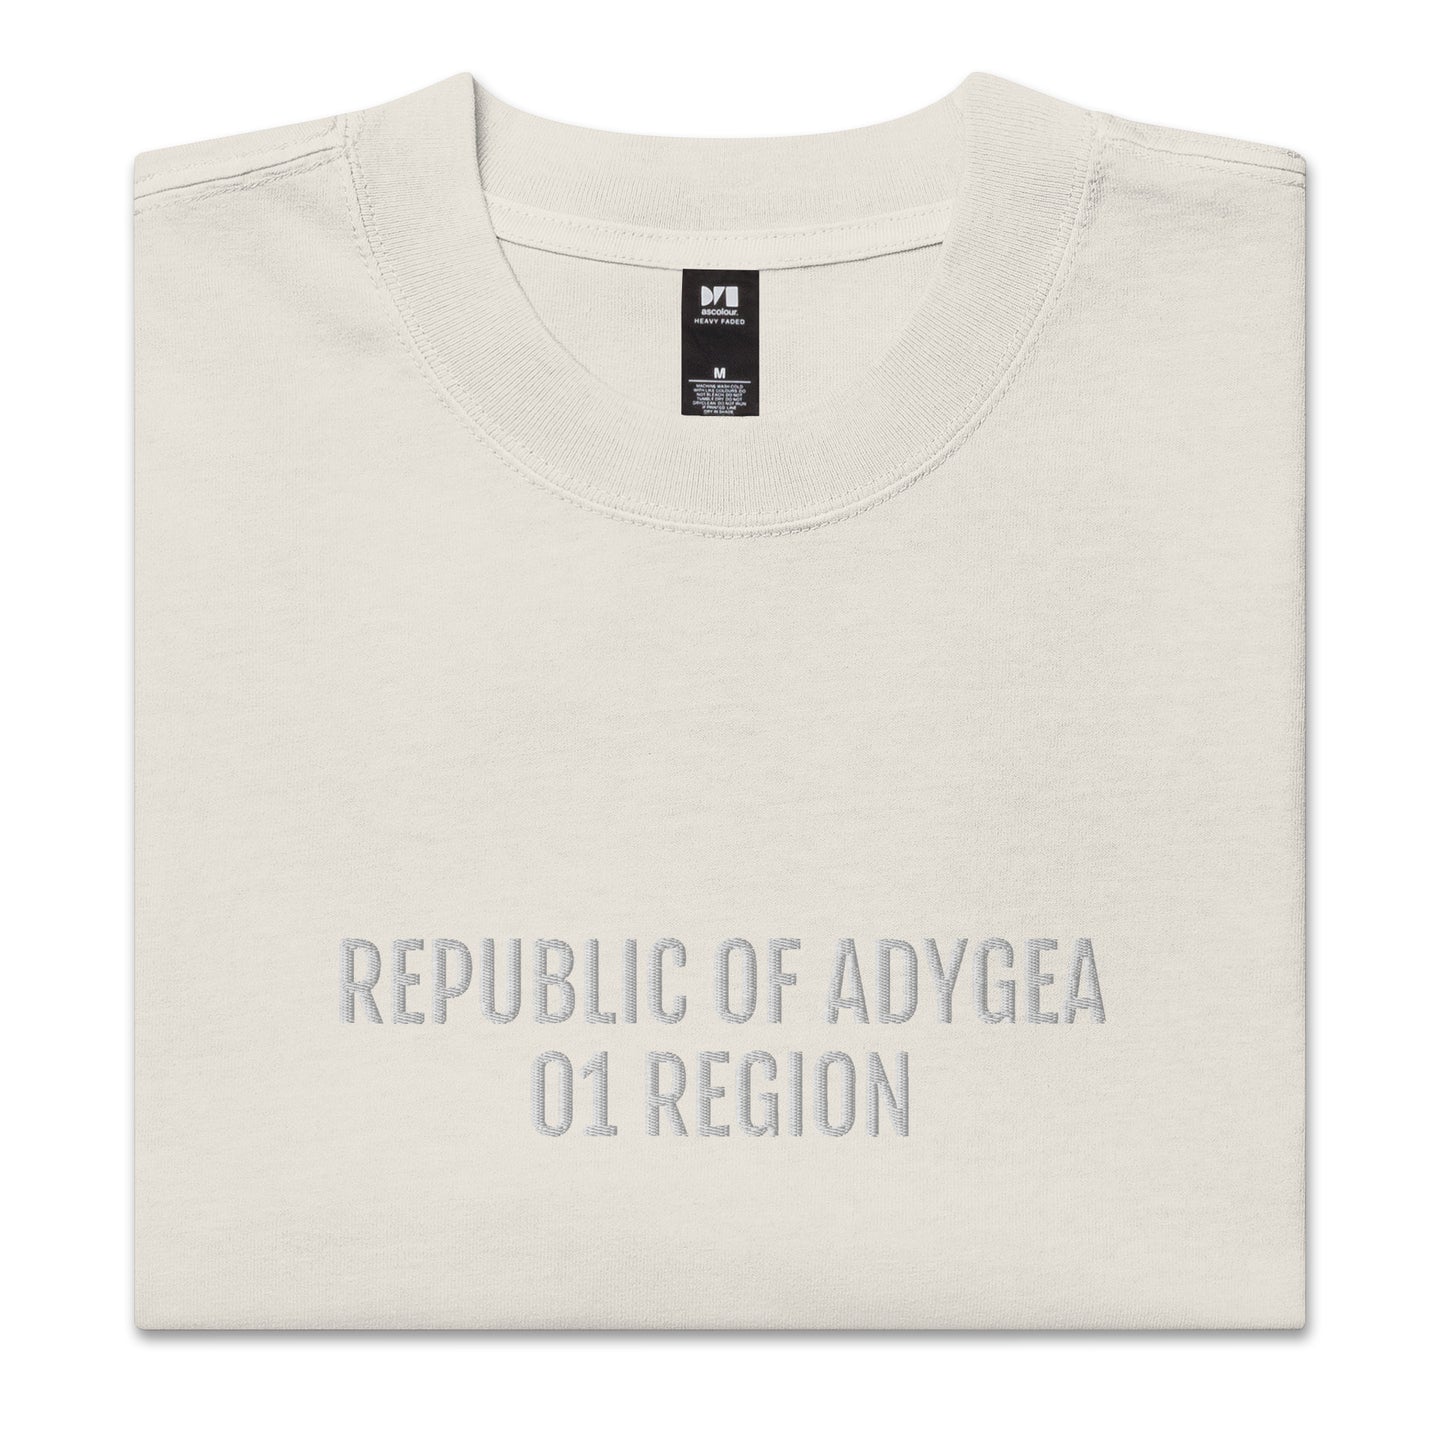 REPUBLIC OF ADYGEA 01 REGION Oversized faded t-shirt EMB